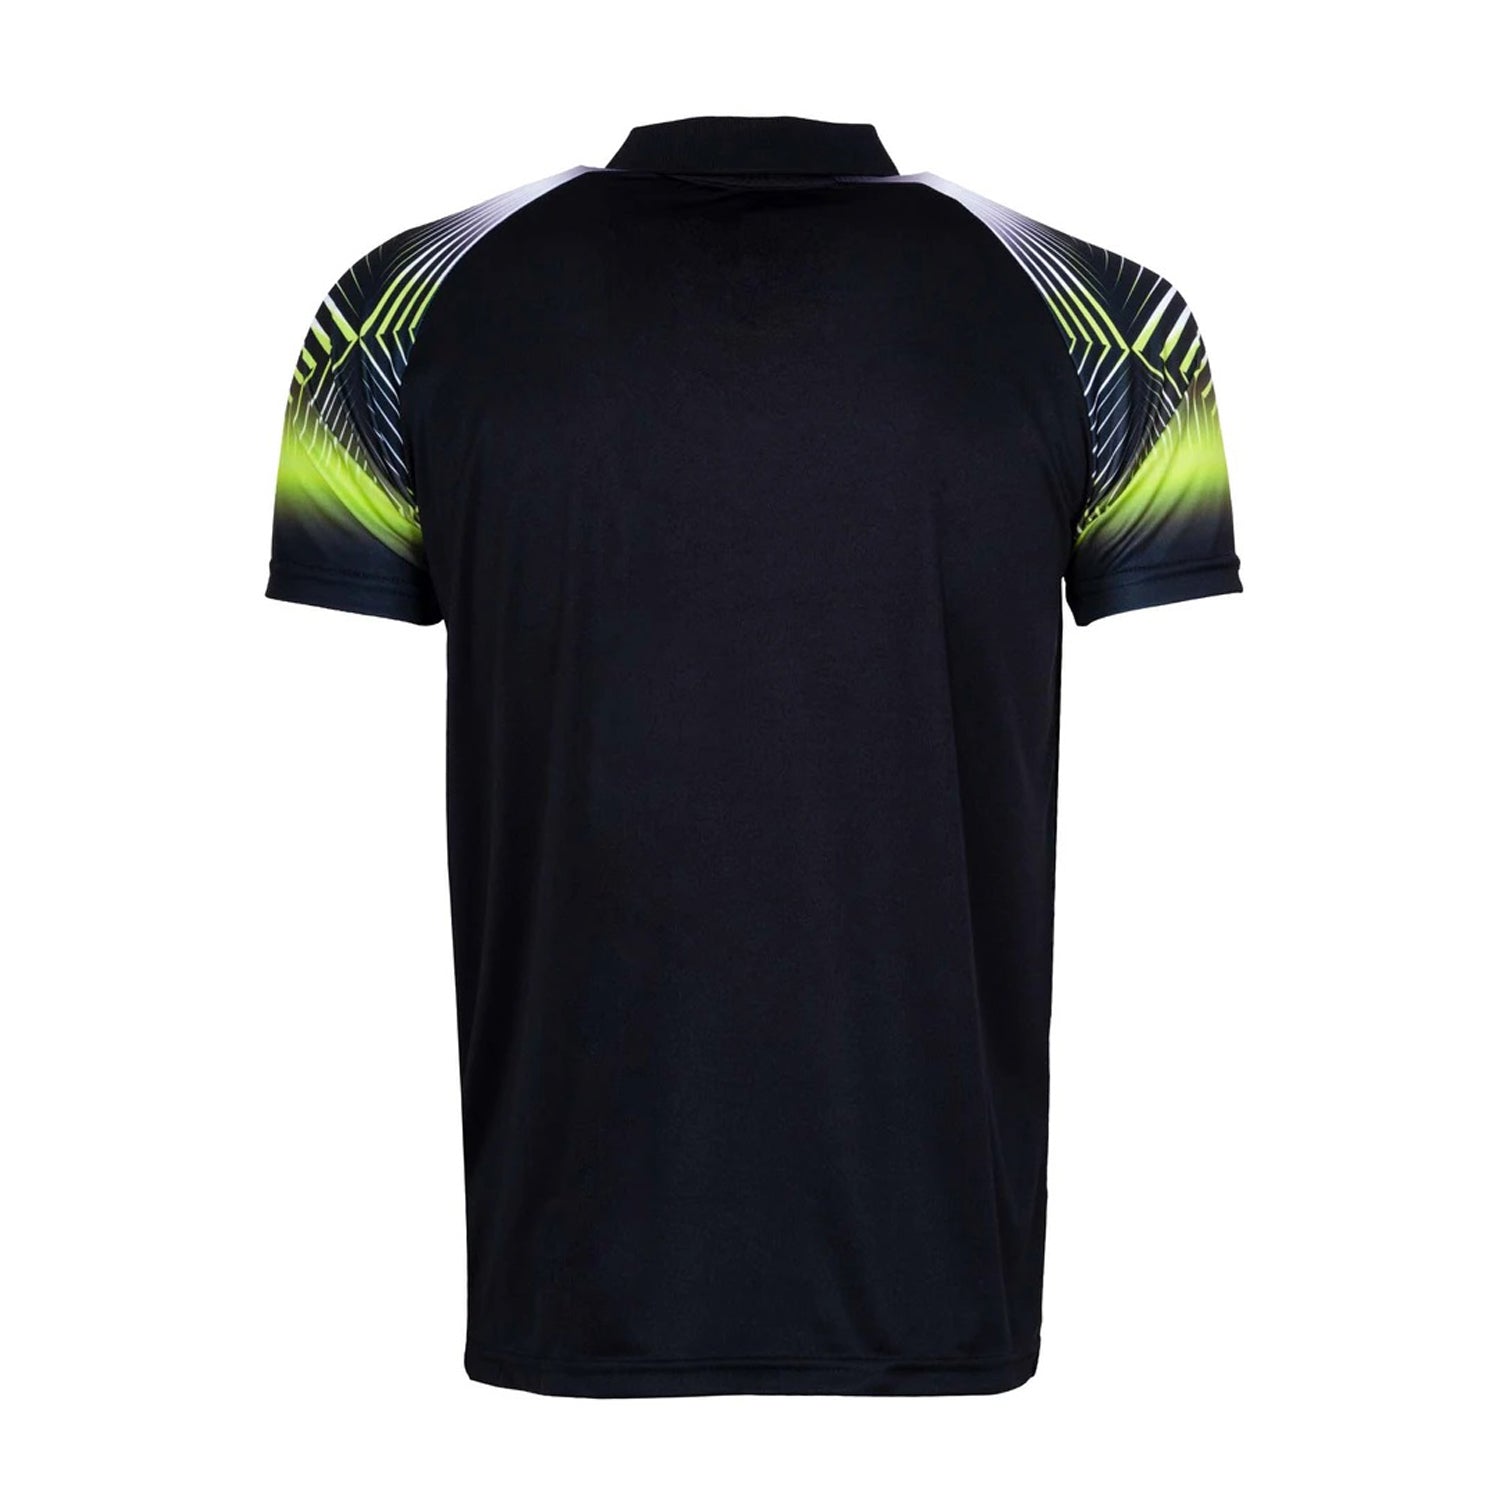 Li-Ning APLR291 Polo Neck Badminton Tshirt, Black - Best Price online Prokicksports.com